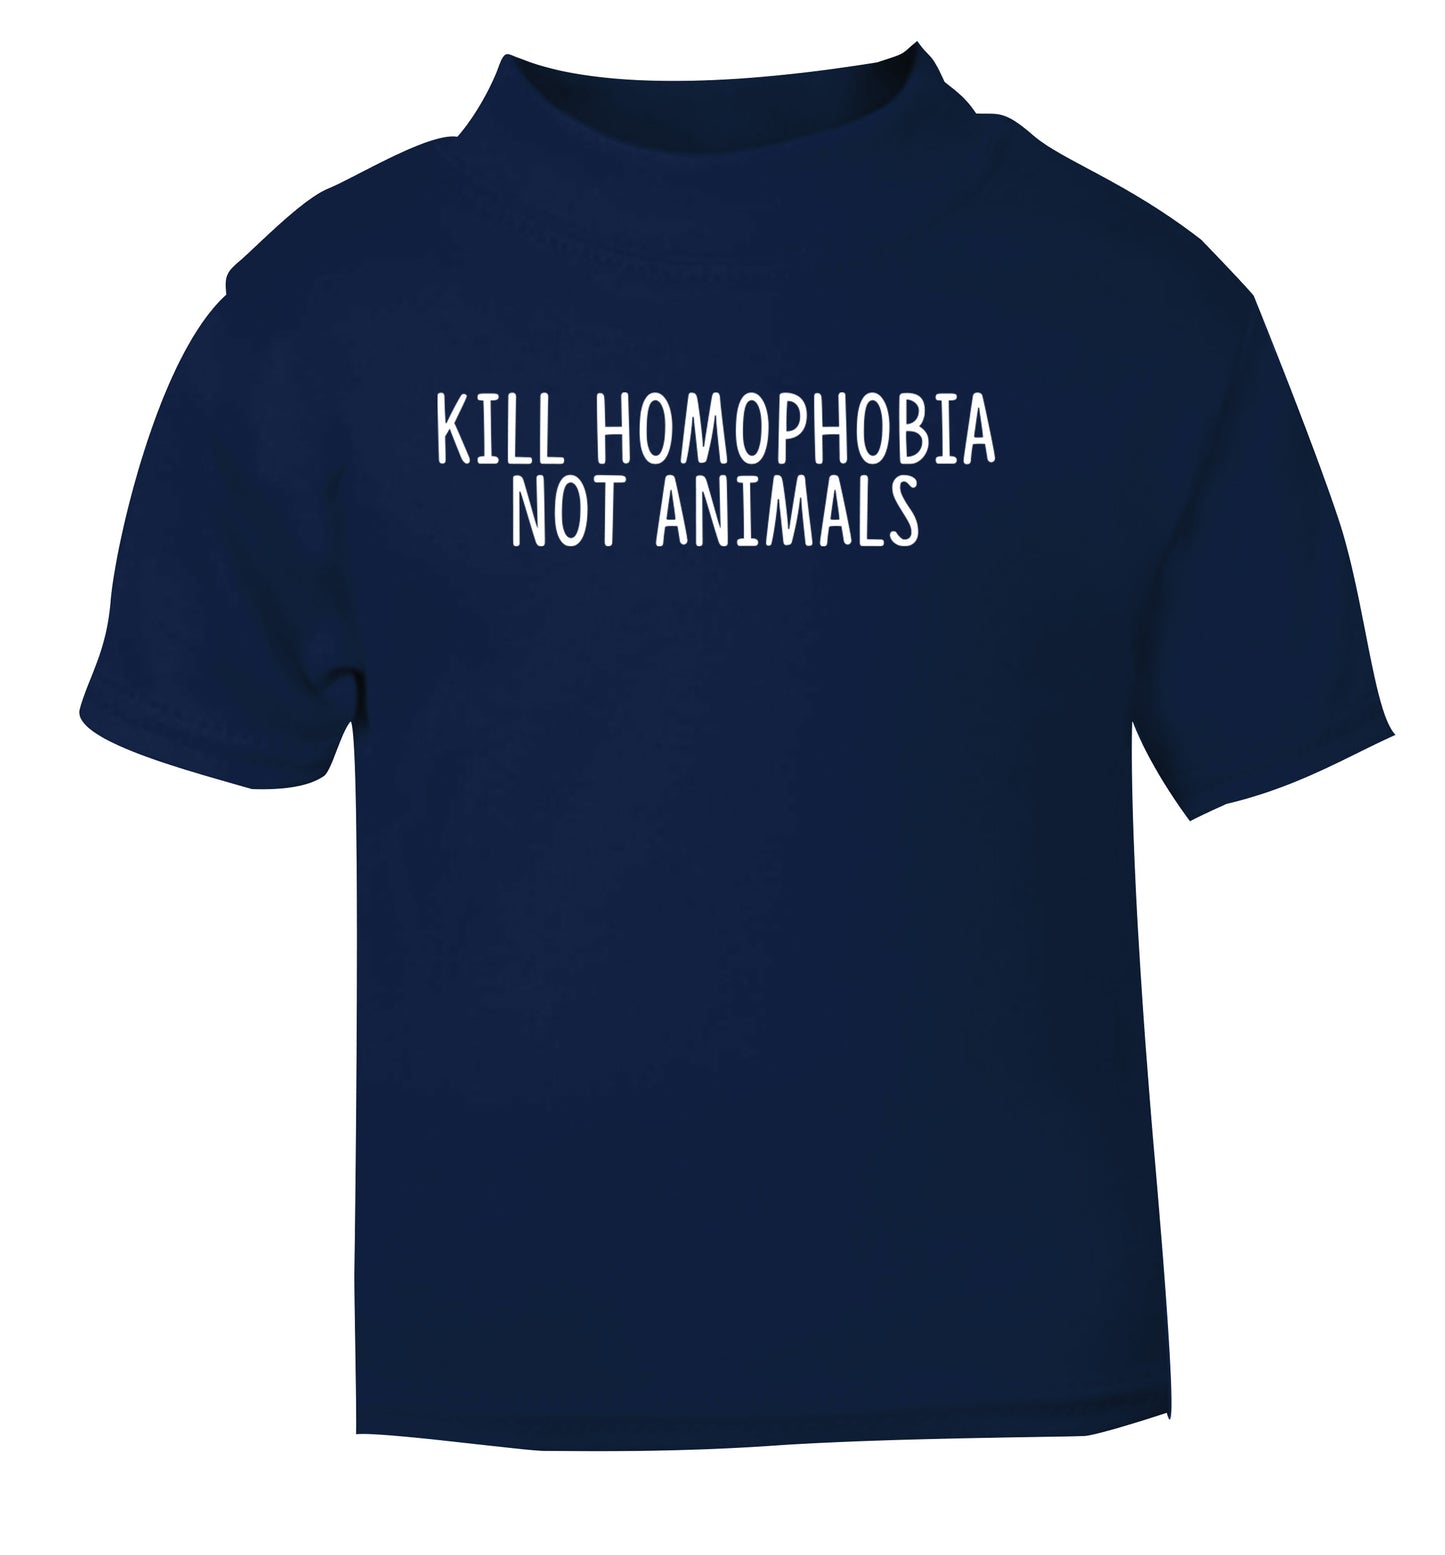 Kill Homophobia Not Animals navy Baby Toddler Tshirt 2 Years